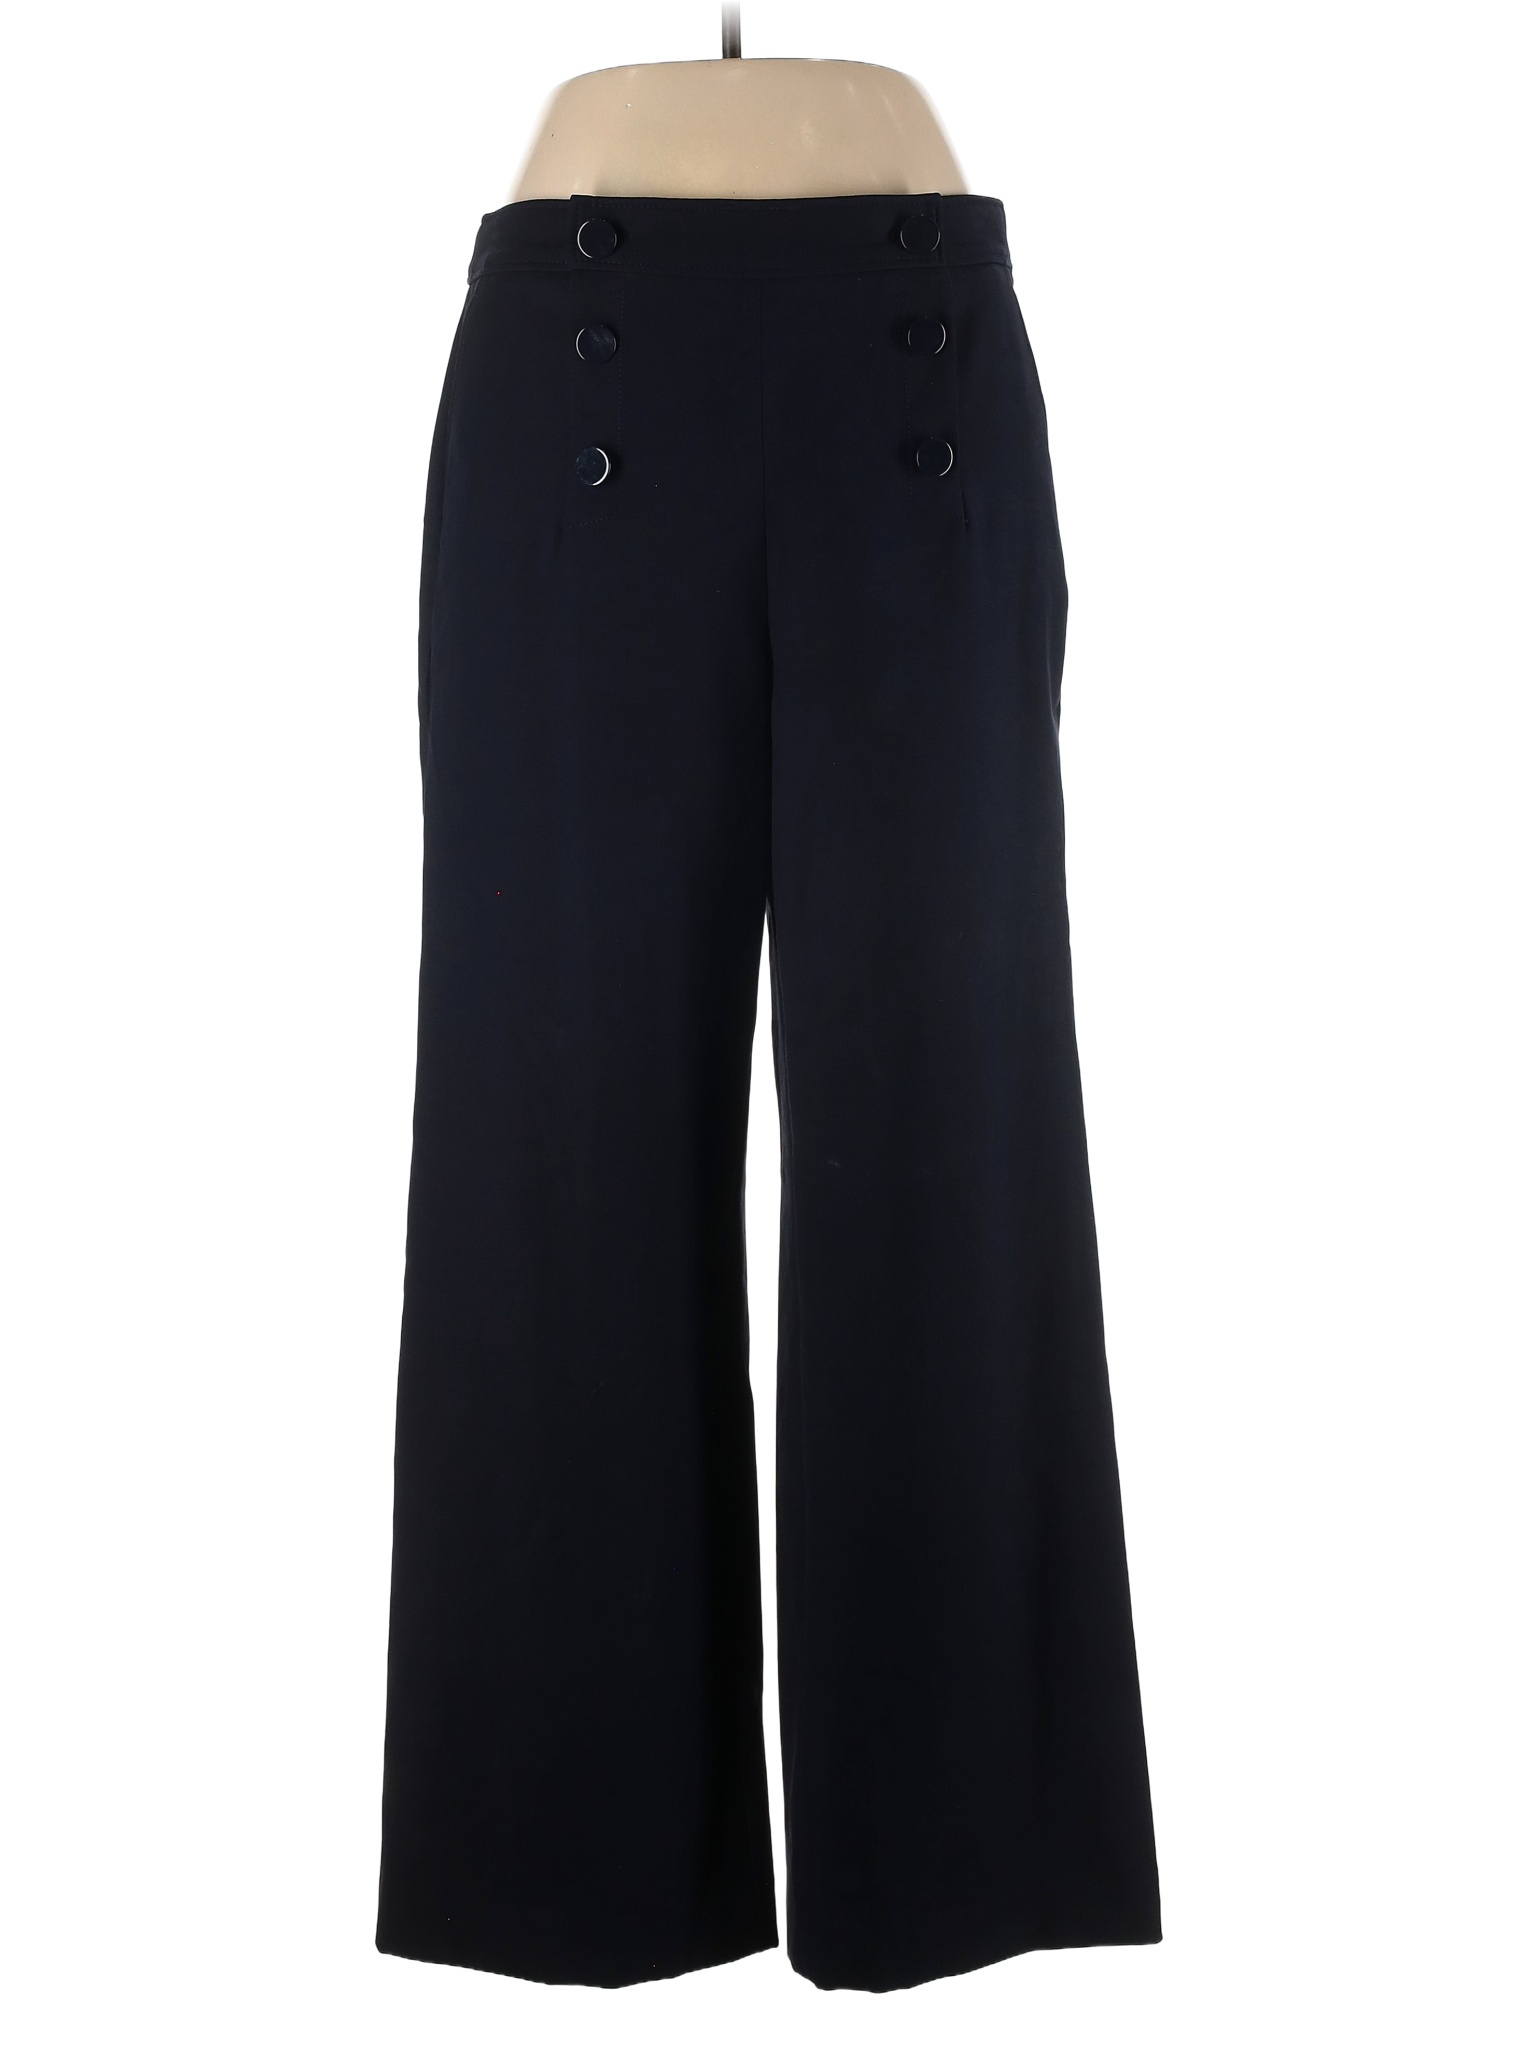 Talbots Solid Blue Dress Pants Size 12 - 81% off | thredUP